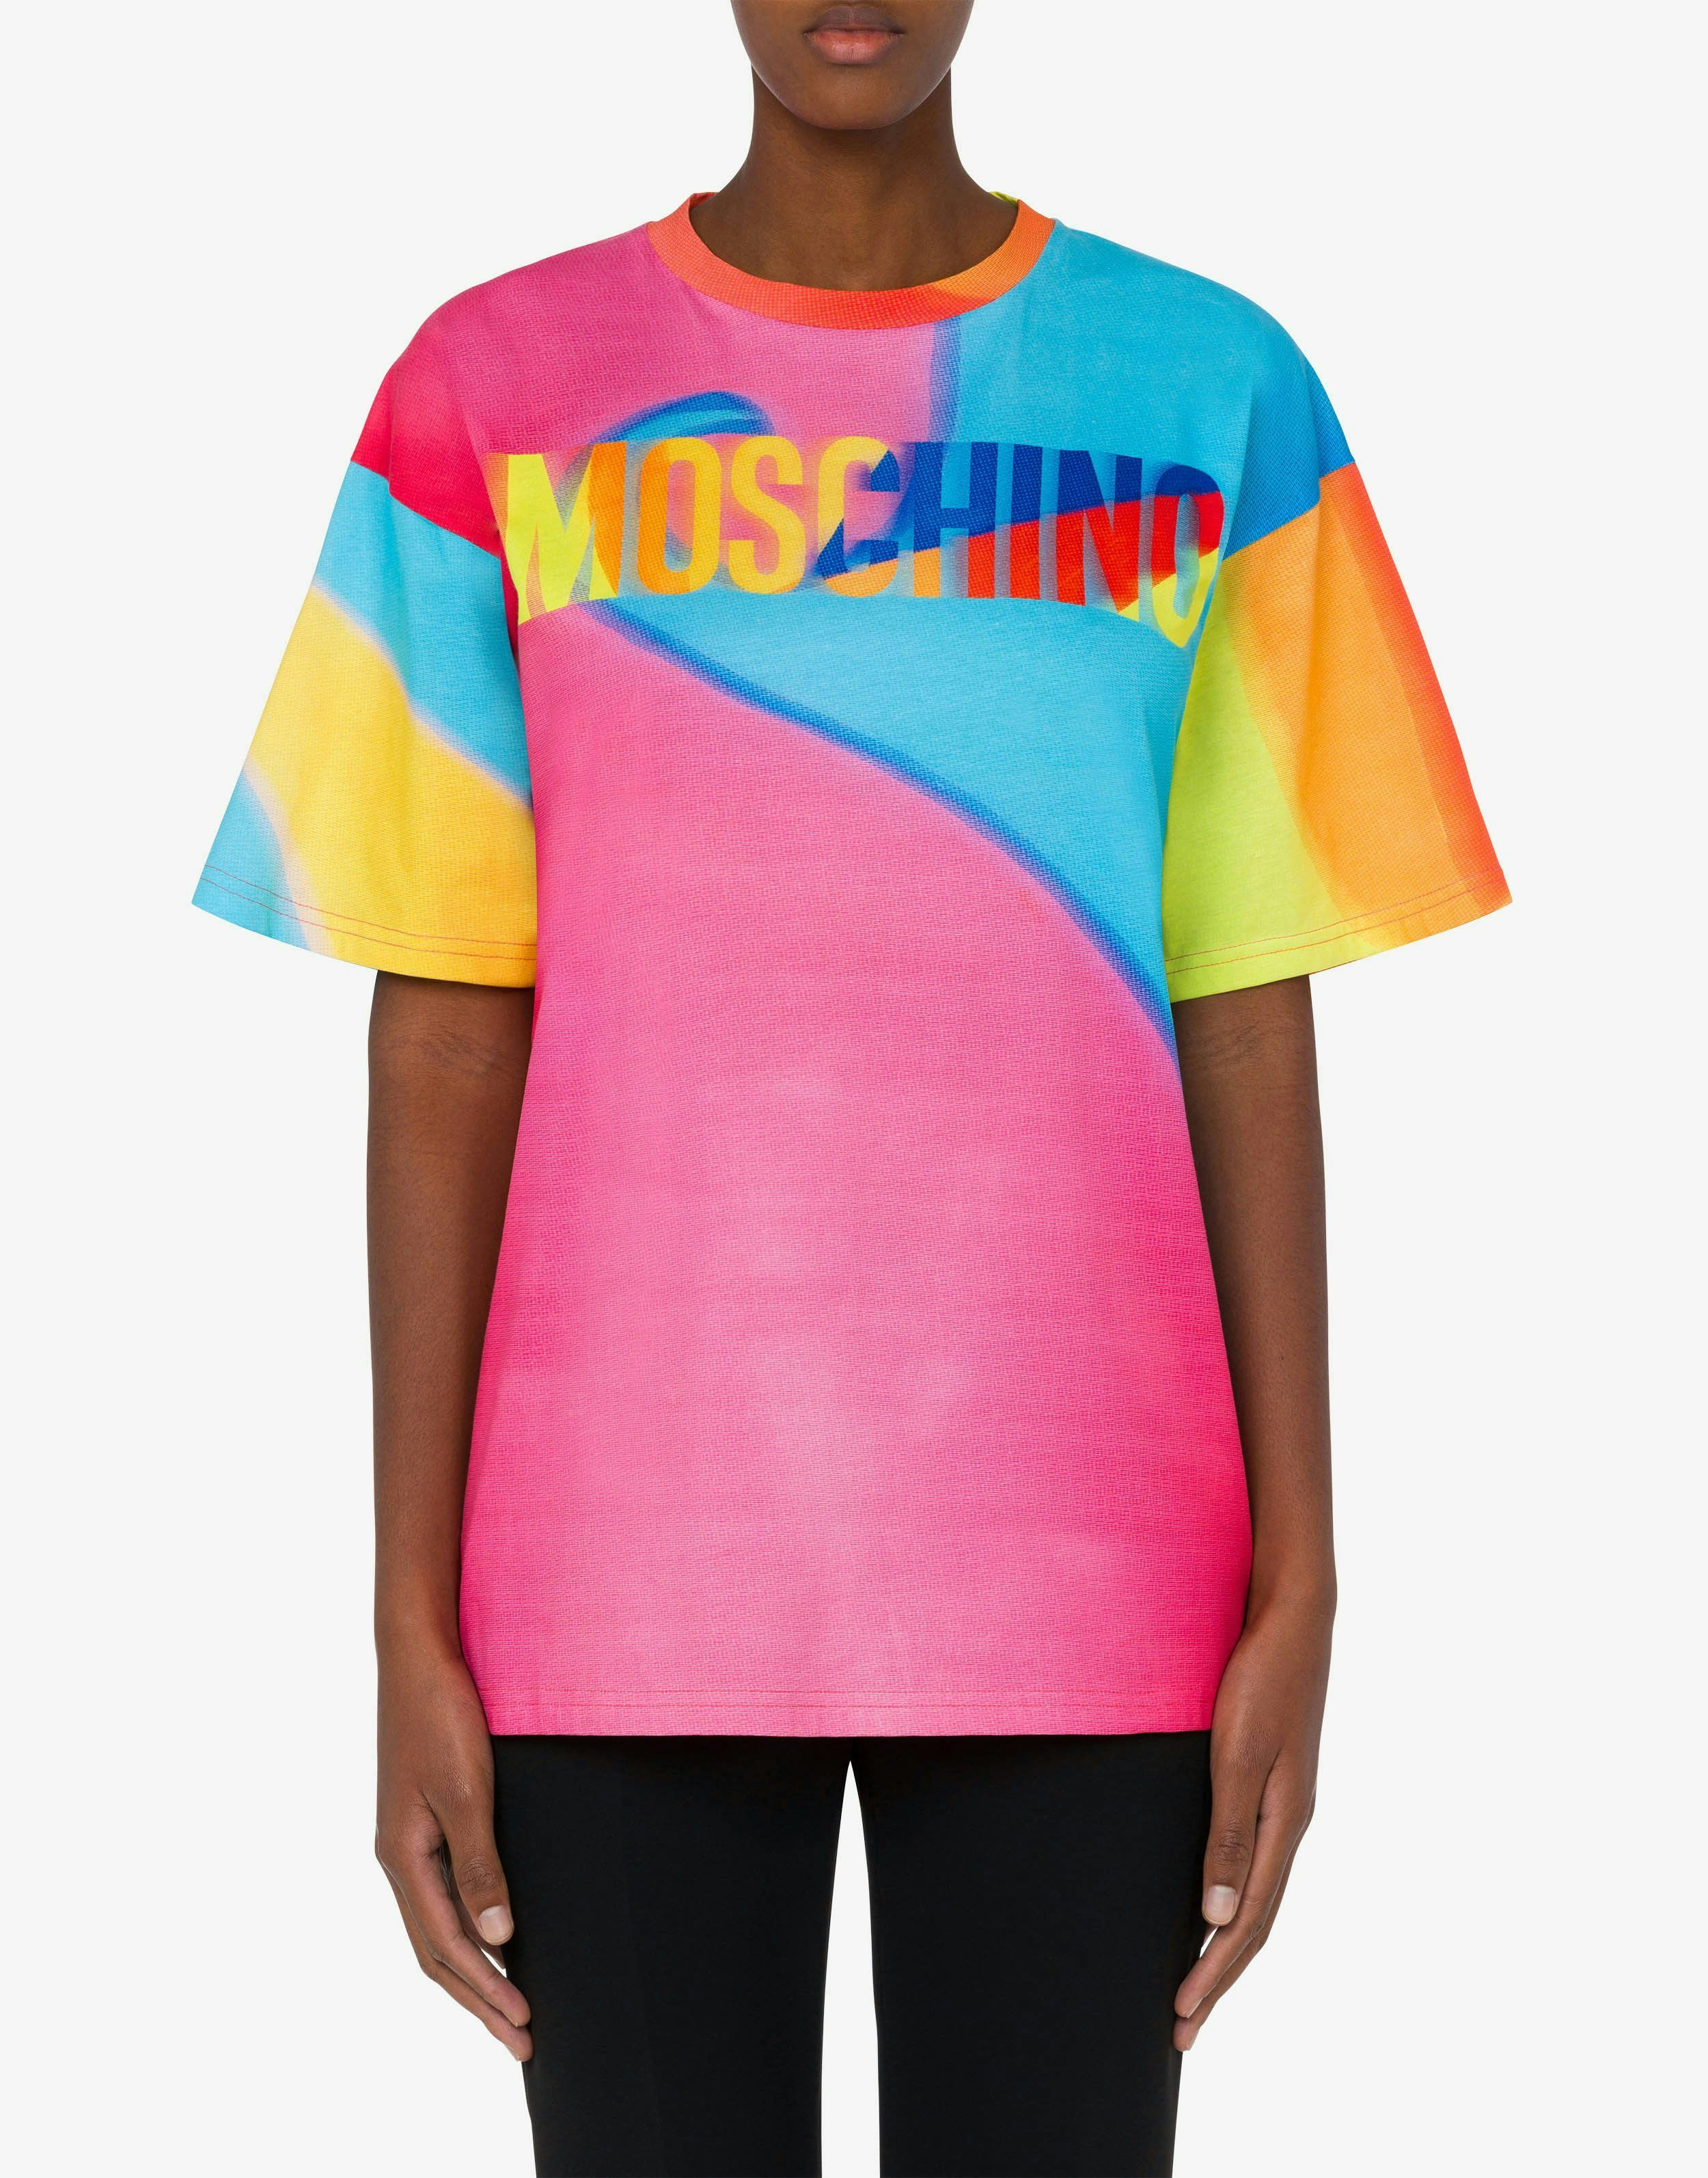 Moschino T-Shirts - Women Clothing | Moschino Official Store